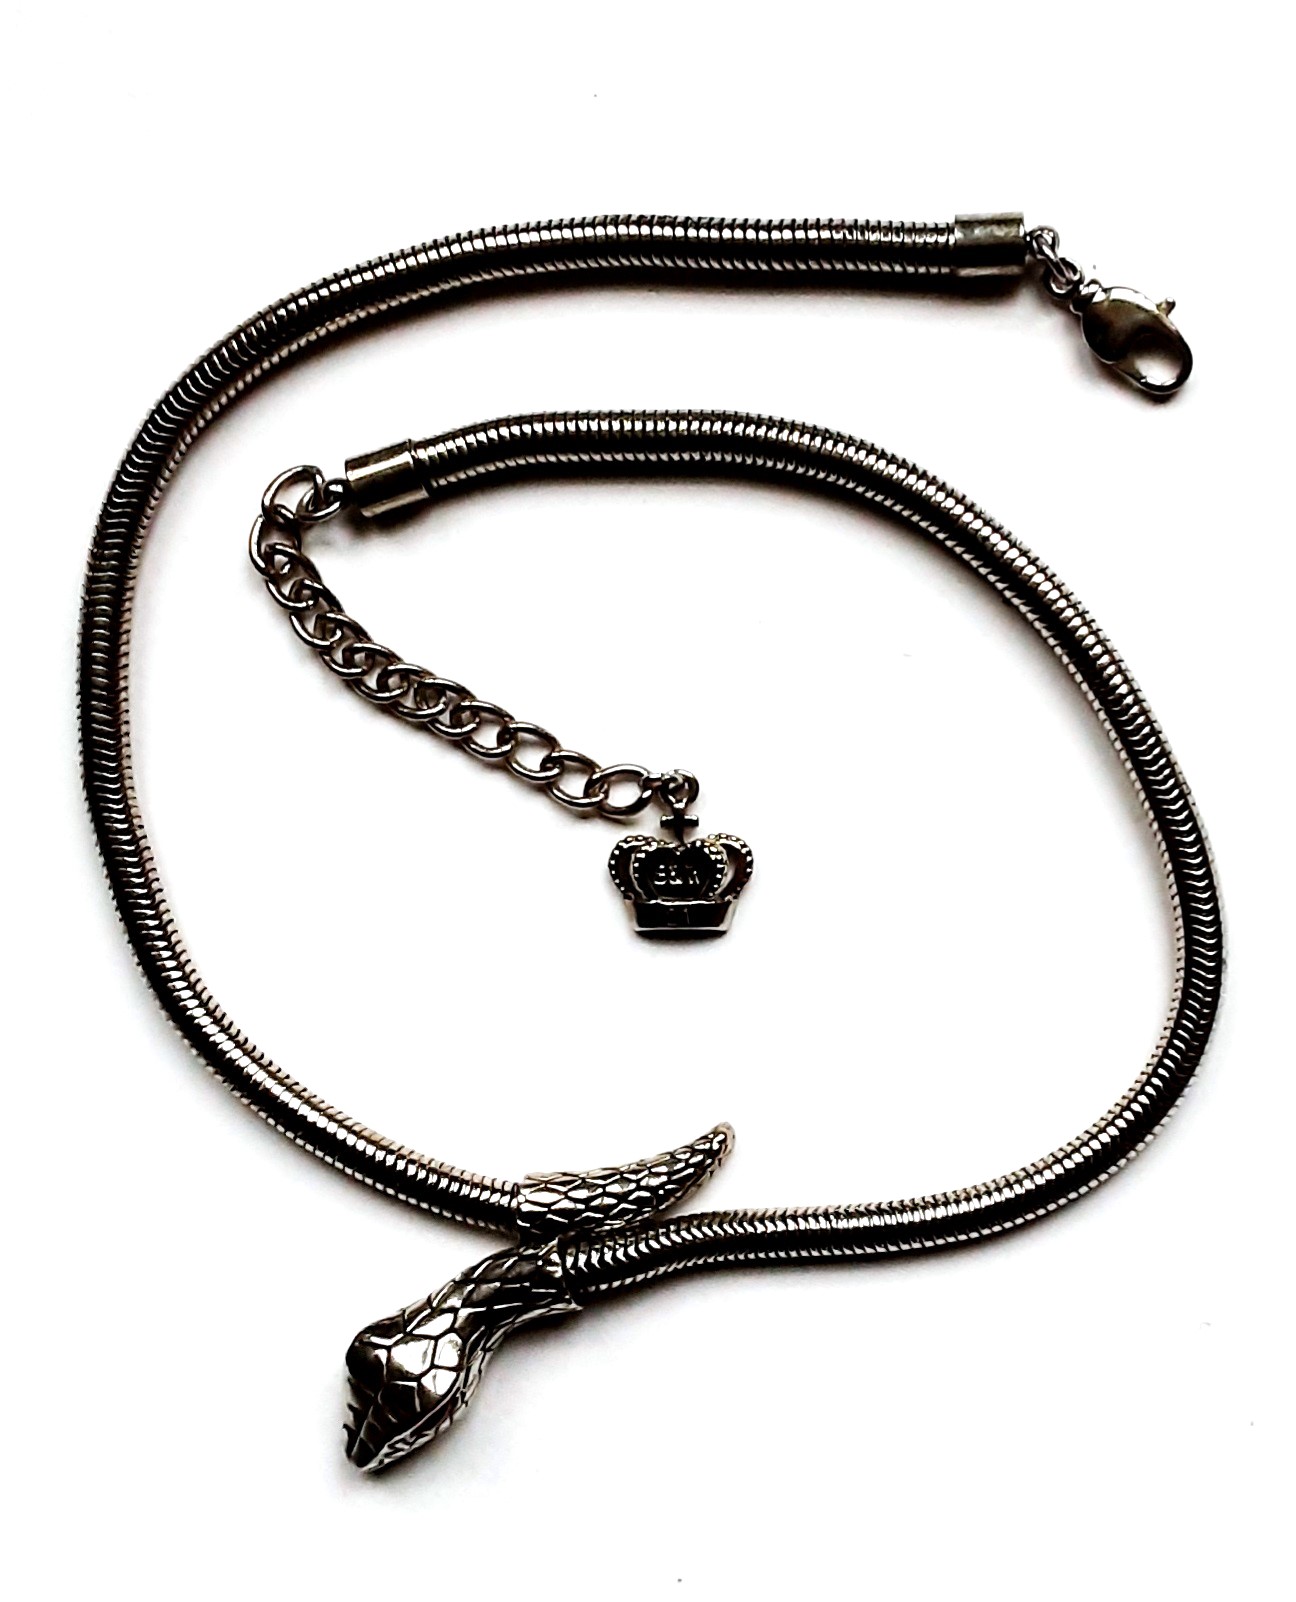 Butler & Wilson snake necklace